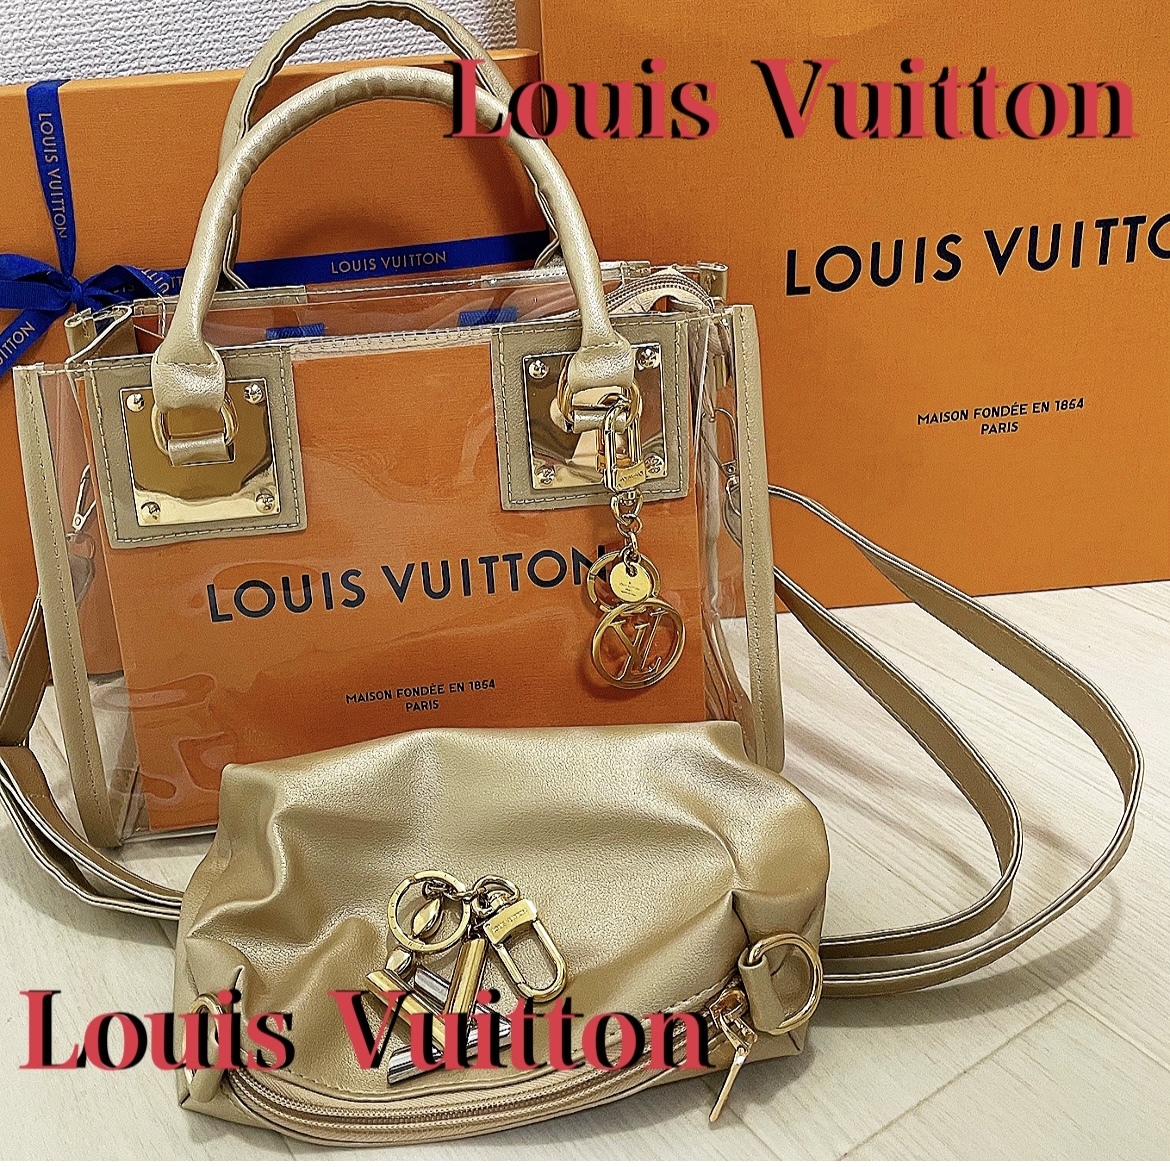 ★☆★☆Louis Vuitton★☆★☆ルイヴィトン VUITTONショップ袋 ショッパー 新品クリアバッグゴールド Louis Vuitton★☆★☆